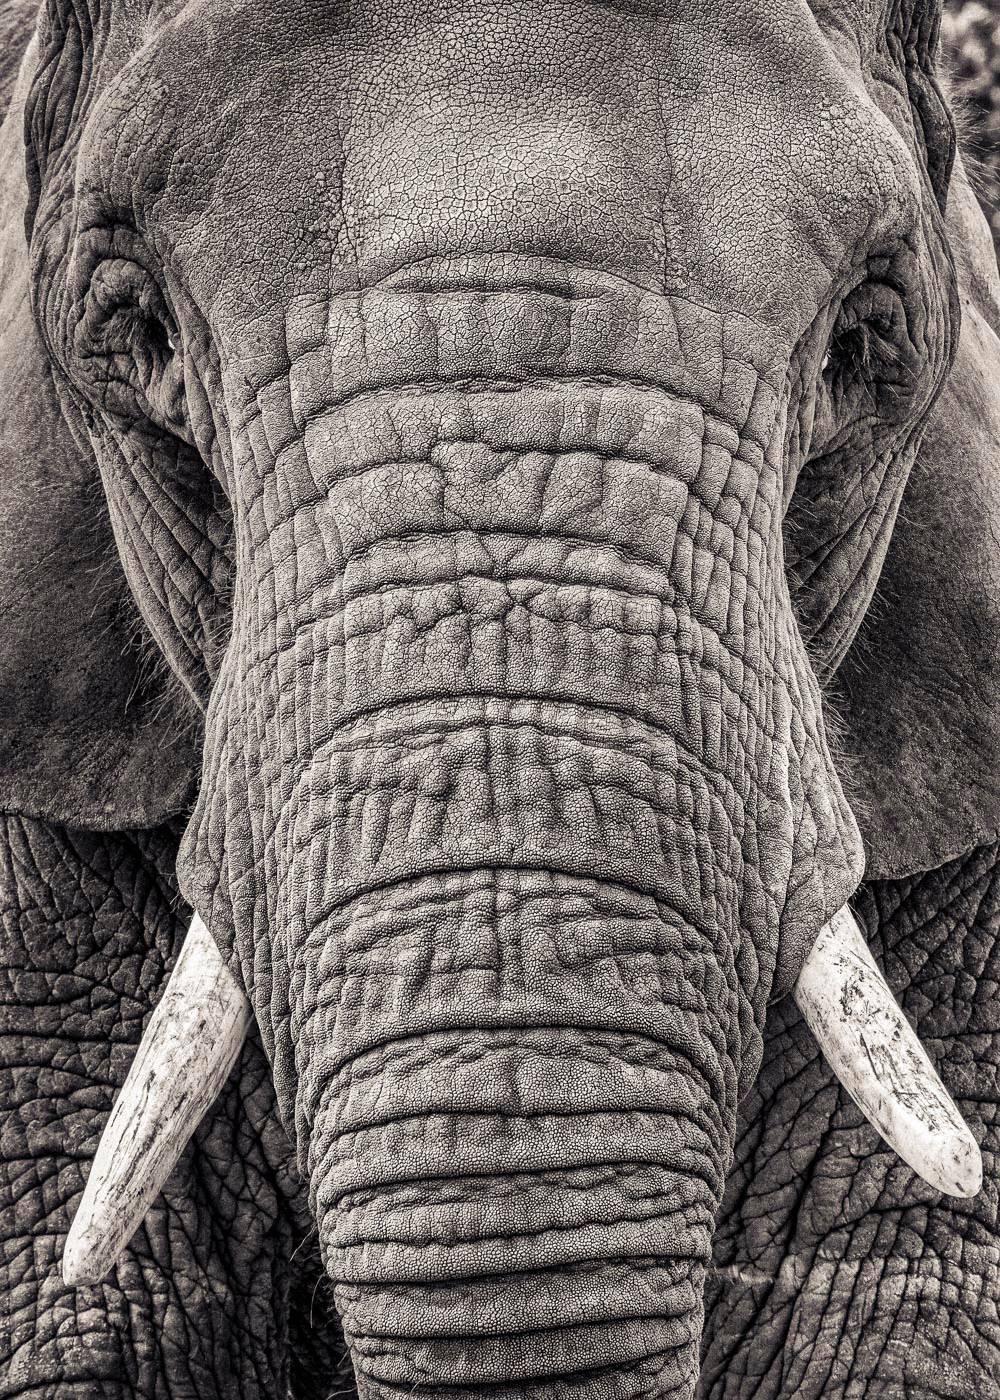 Portrait of an Elephant III